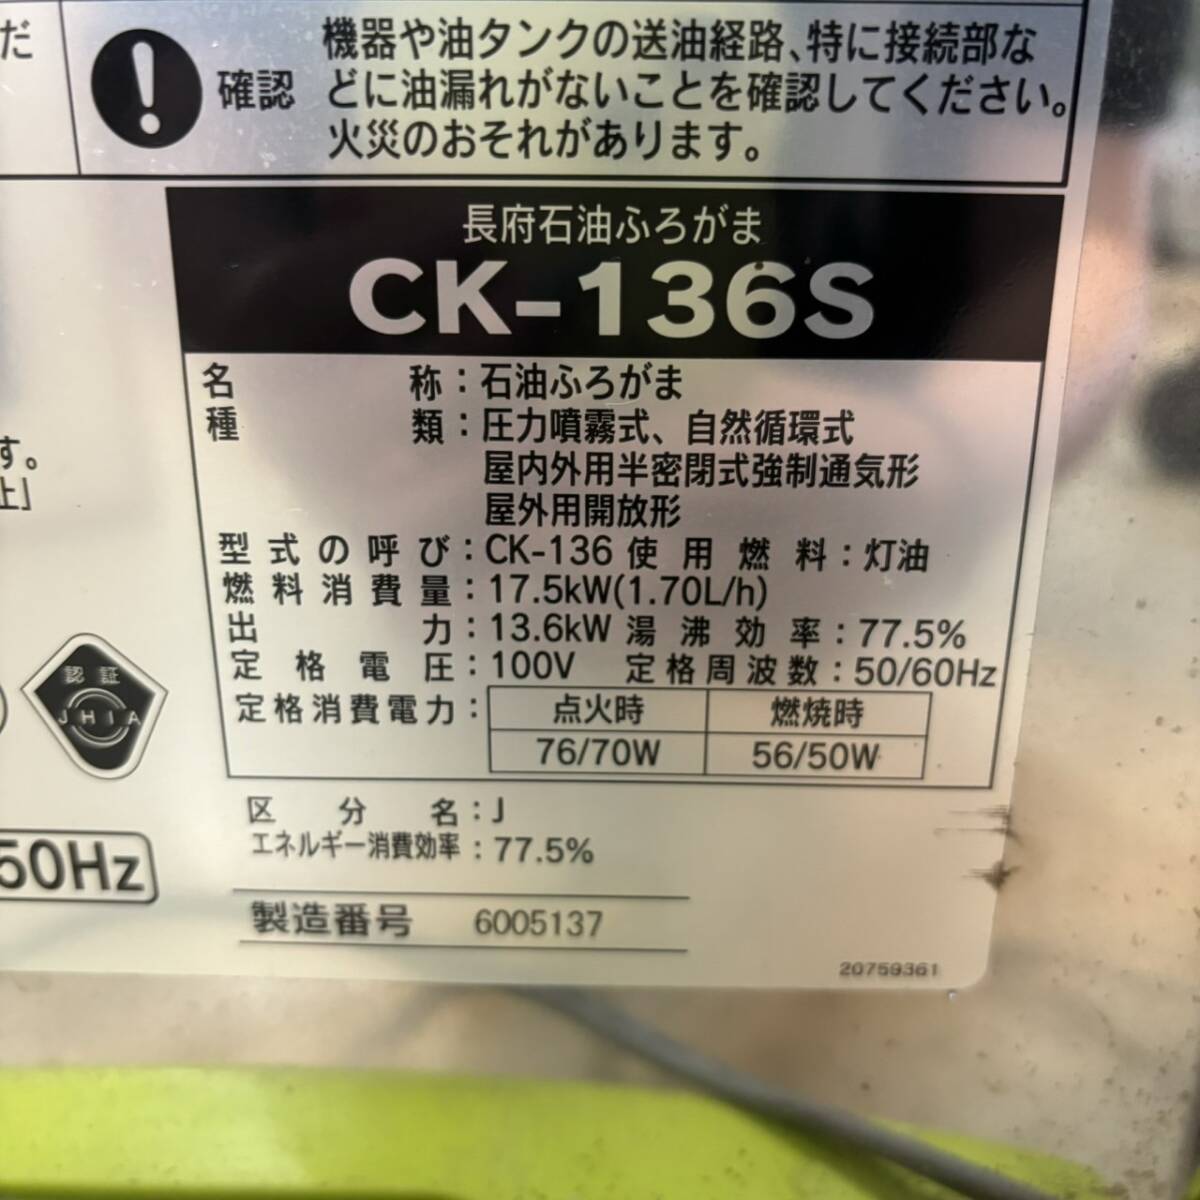 M116[ length prefecture kerosene bath boiler ] kerosene .. bulrush kerosene exclusive use bath boiler CK-136S